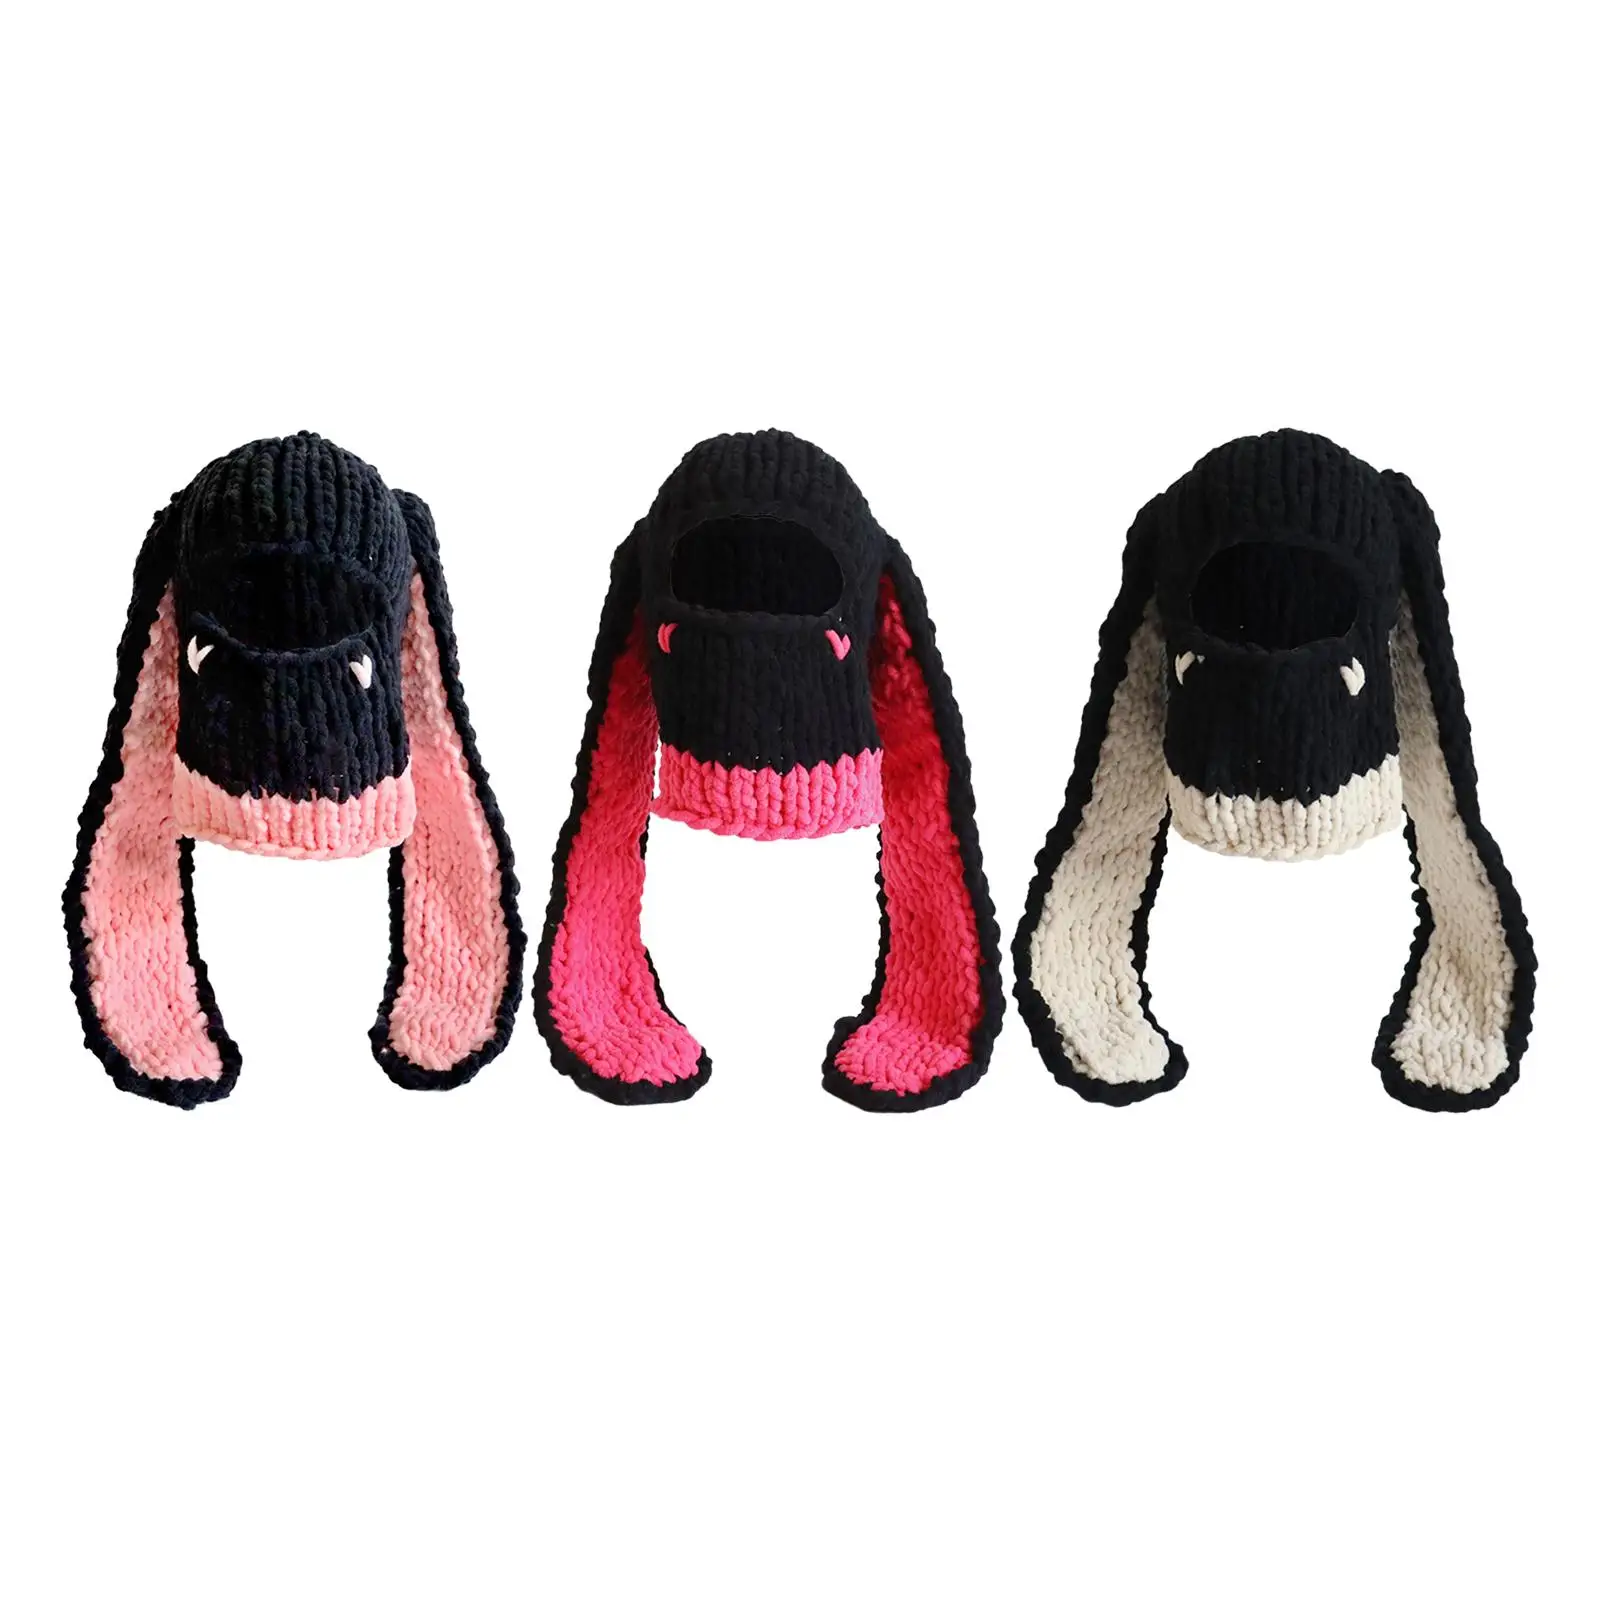 Stylsh Winter Knitted Hat for Women Girl Neck Warmer Rabbit Ears Beanie Hats